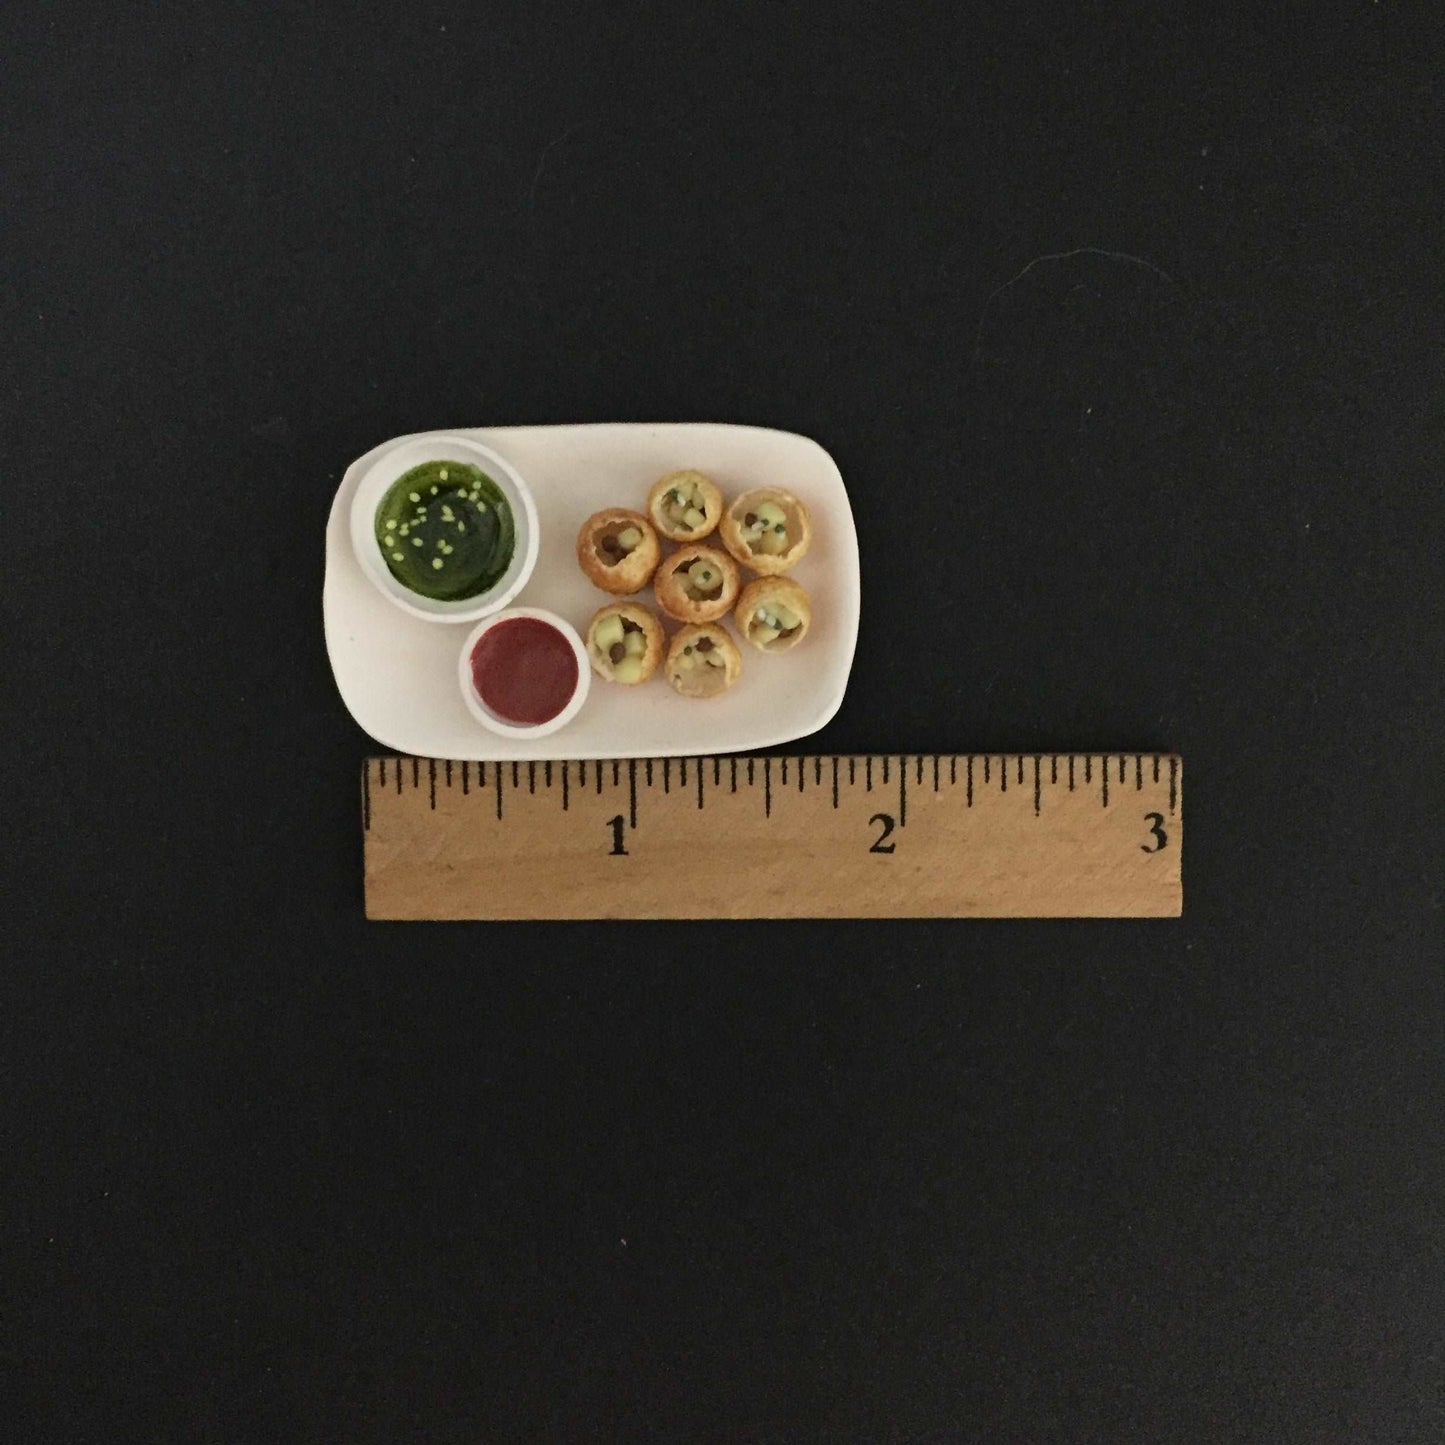 Pani Puri Golgappa Puchka Indian Chaat Miniature Food Magnet